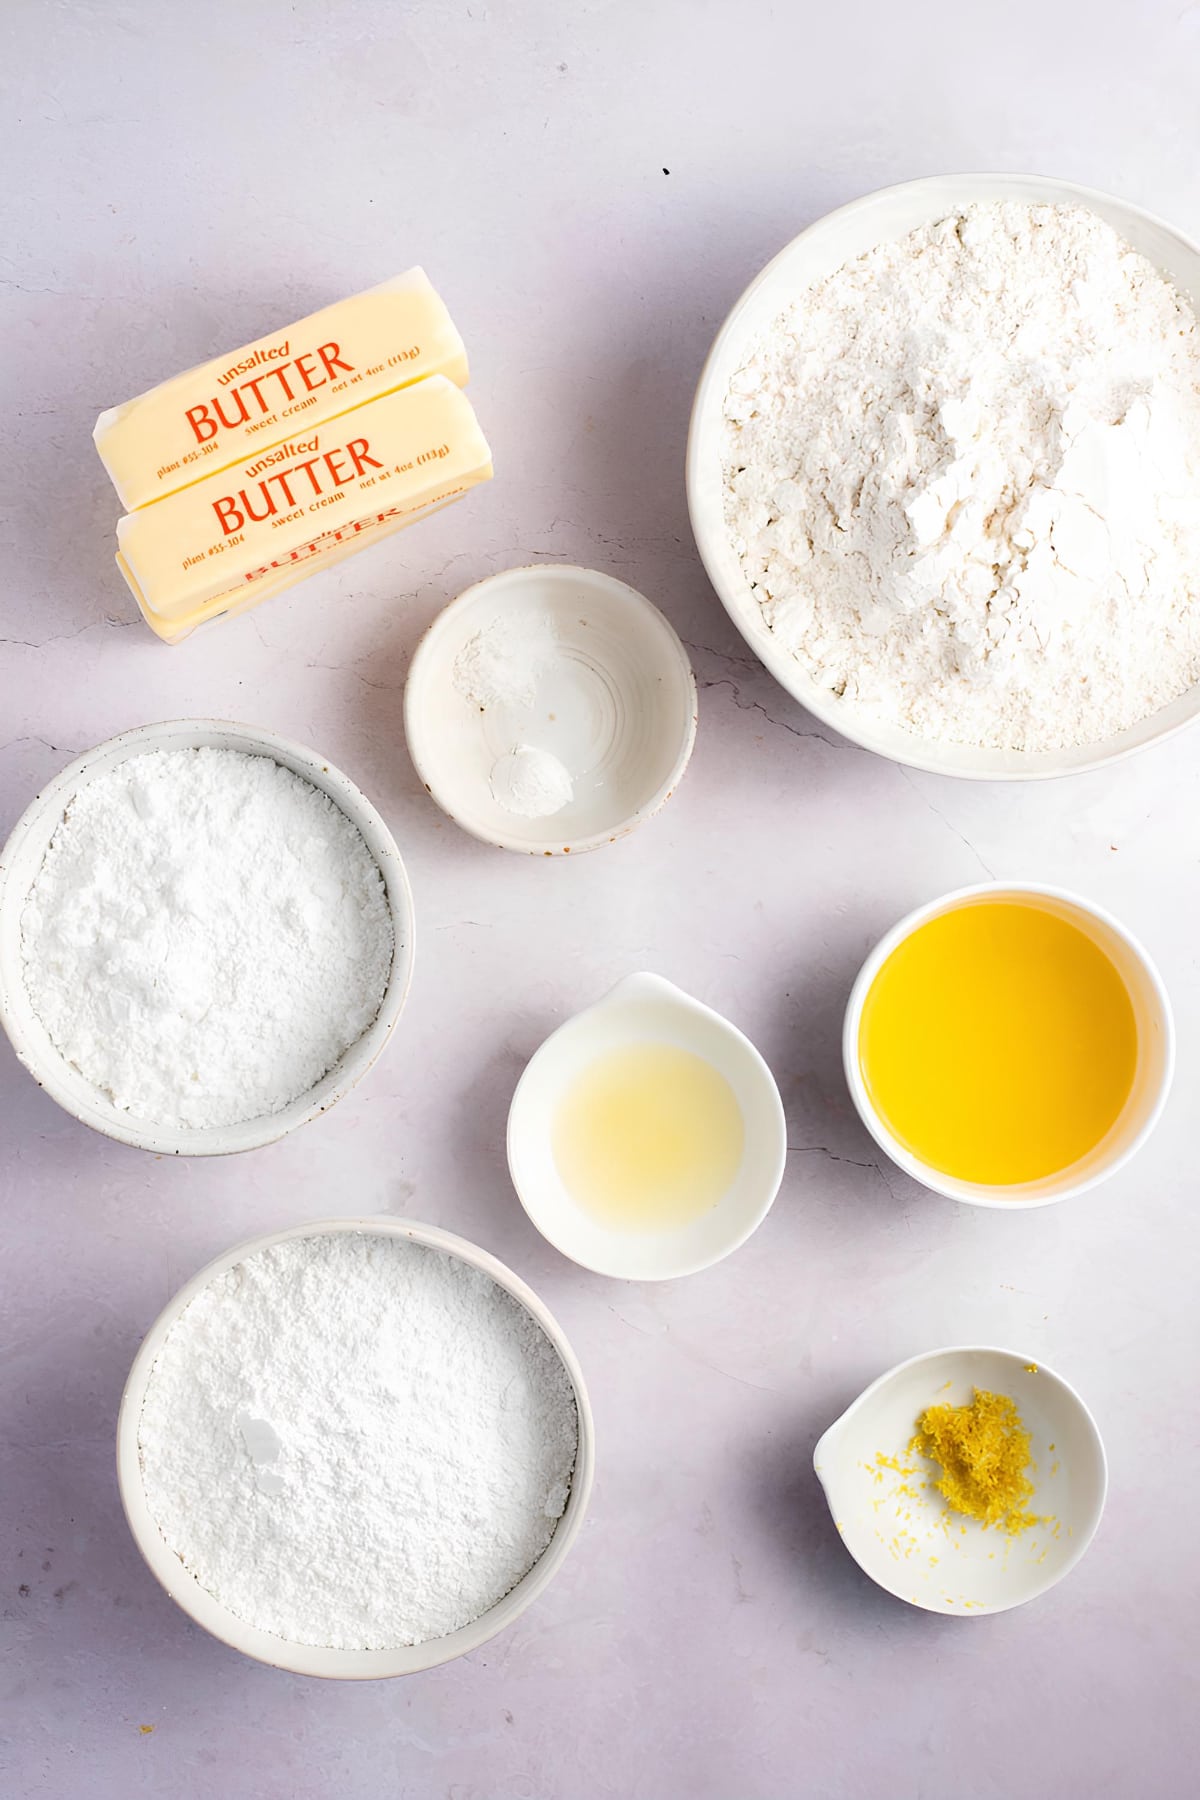 Lemon Shortbread Cookies Ingredient: flour, blocks of butter, eggs, and lemon juice portion on a white table surface. 